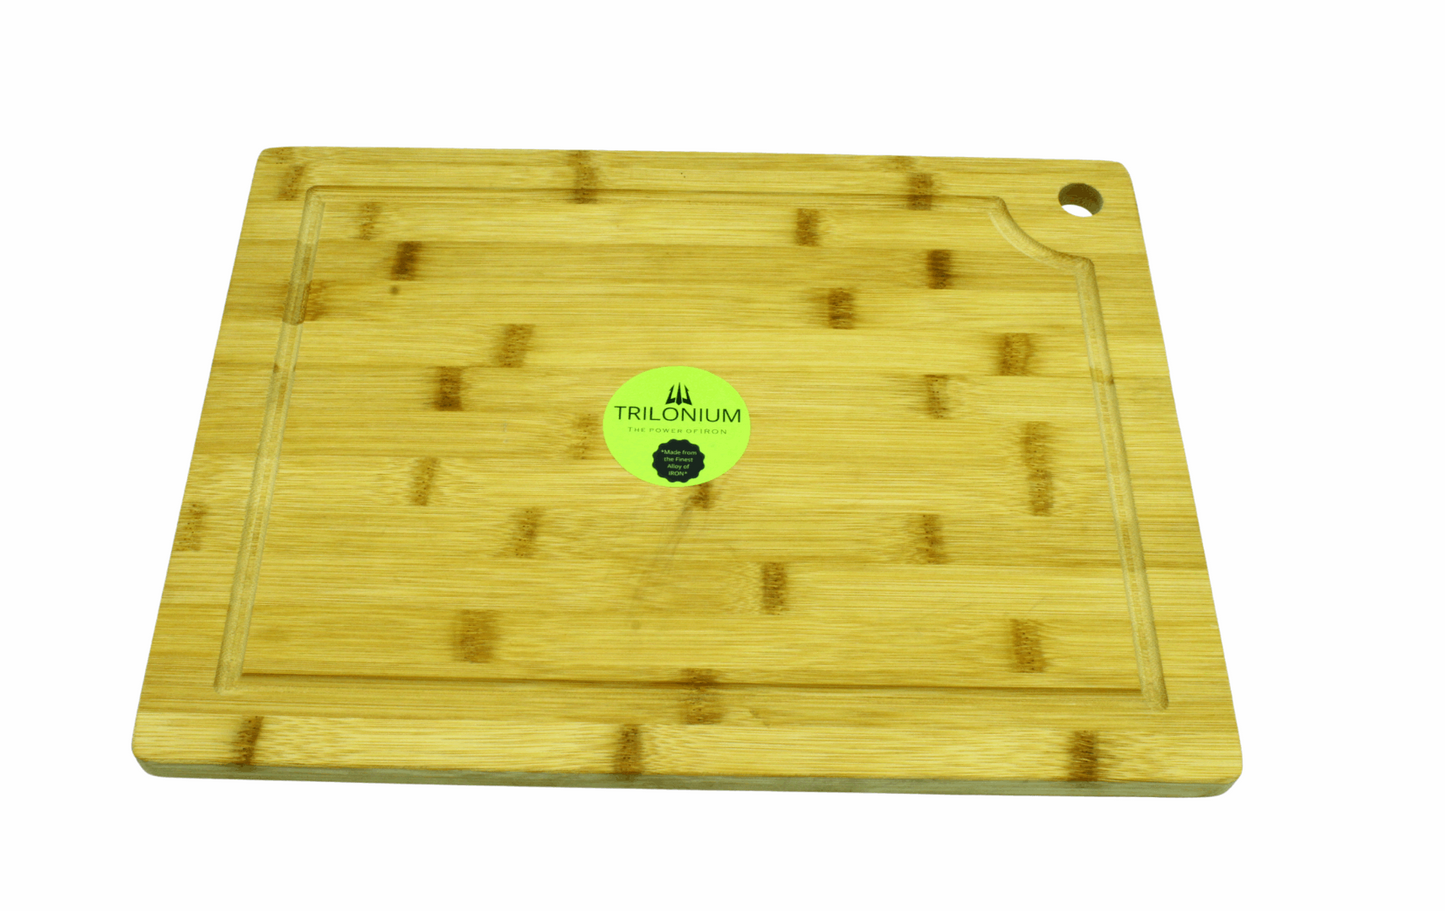 Bamboo Chopping Board | Cutting Board 16 x 12 inches | 1.13 KG TRILONIUM | Cast Iron Cookware